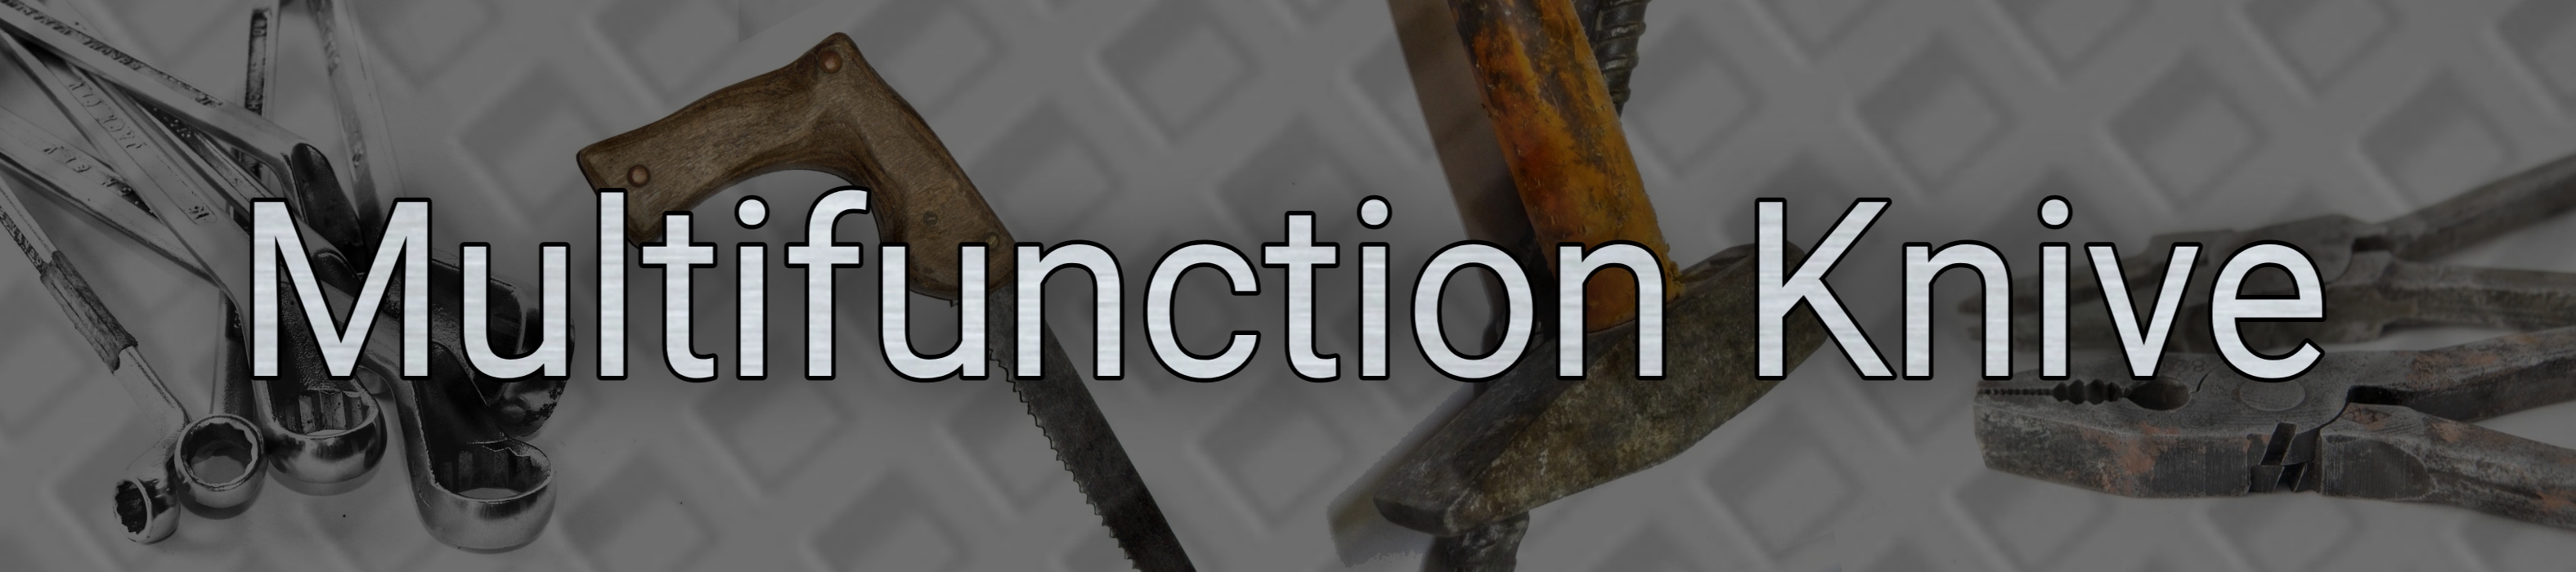 Banner_multifunction_knive